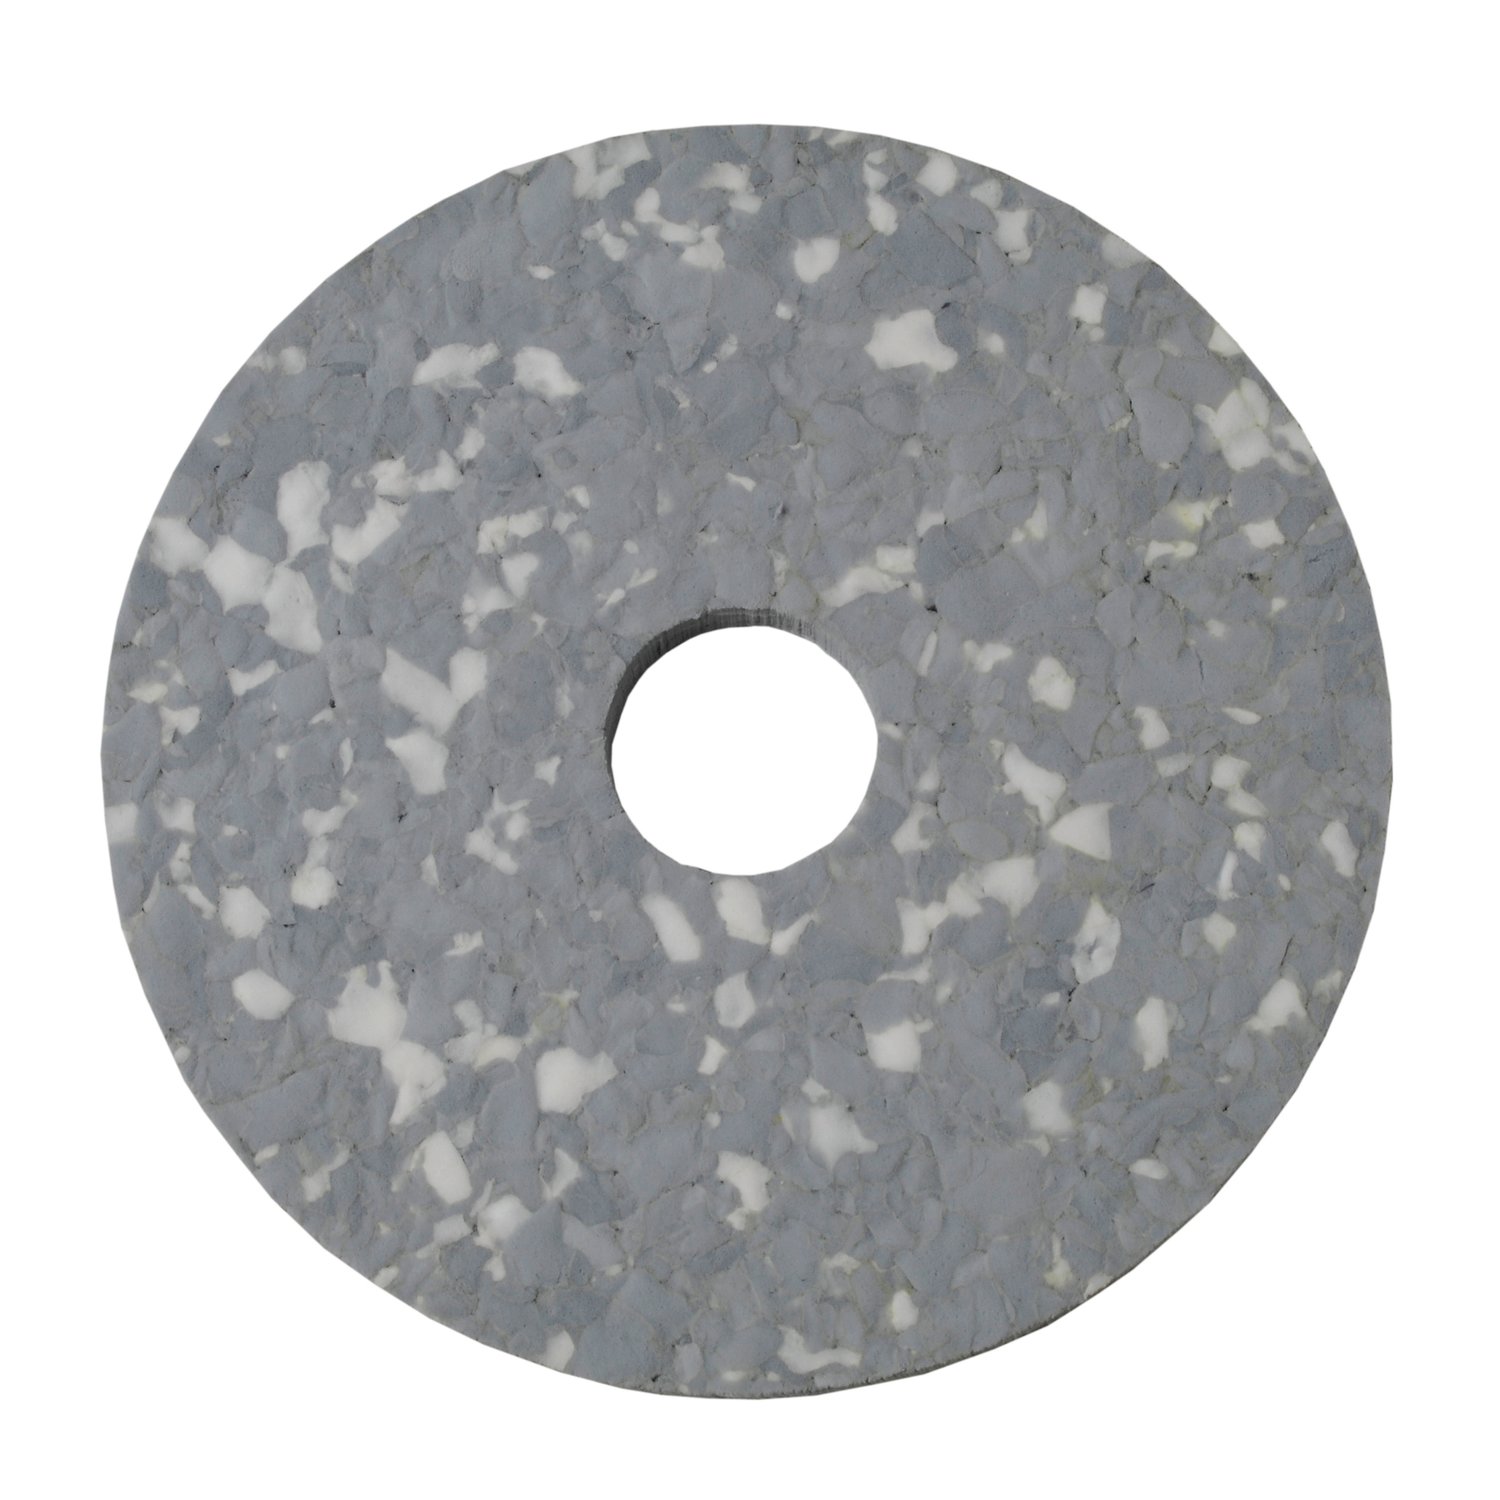 7000032549 - 3M Melamine Floor Pad, Grey/White, 432 mm, 5/Case